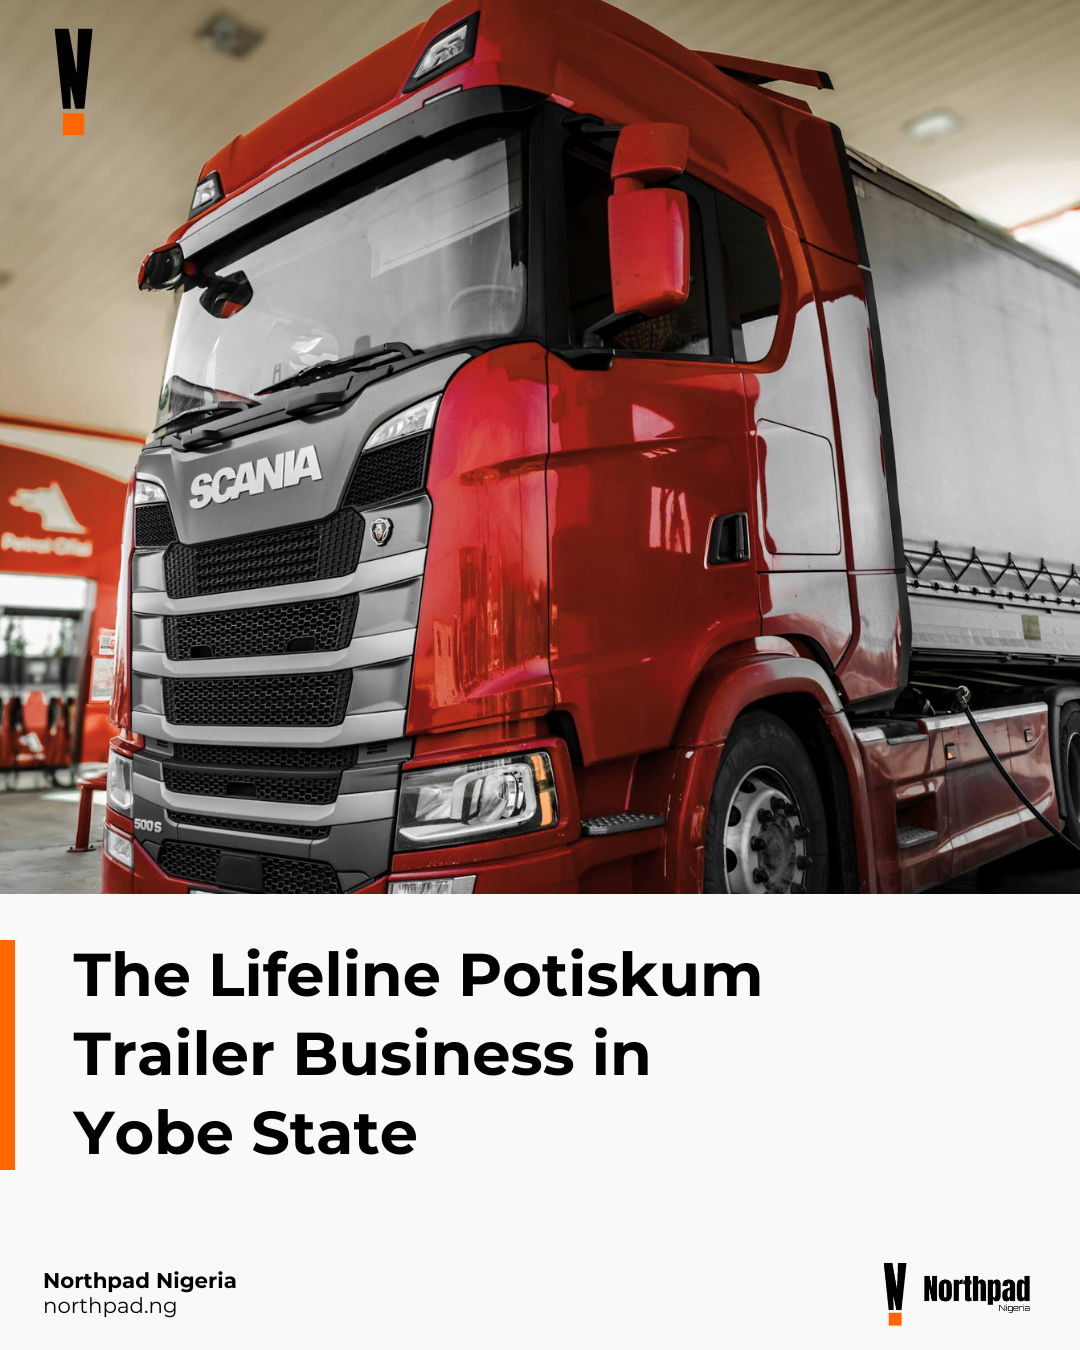 The Lifeline Potiskum Trailer Business in Yobe State